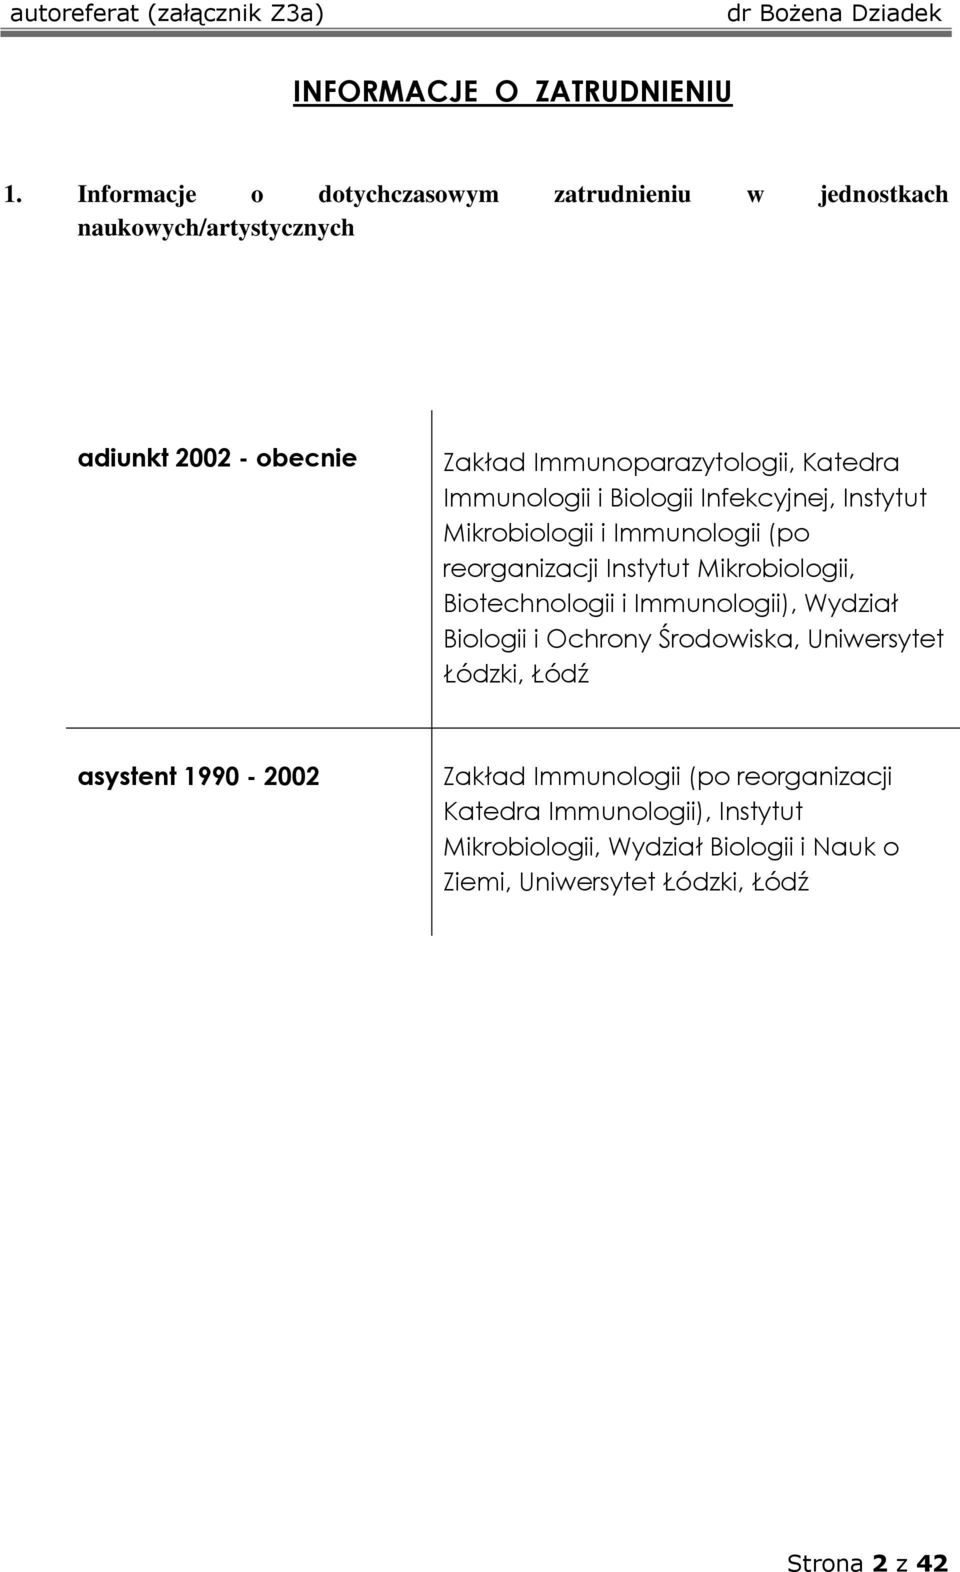 Immunologii i Biologii Infekcyjnej, Instytut Mikrobiologii i Immunologii (po reorganizacji Instytut Mikrobiologii, Biotechnologii i